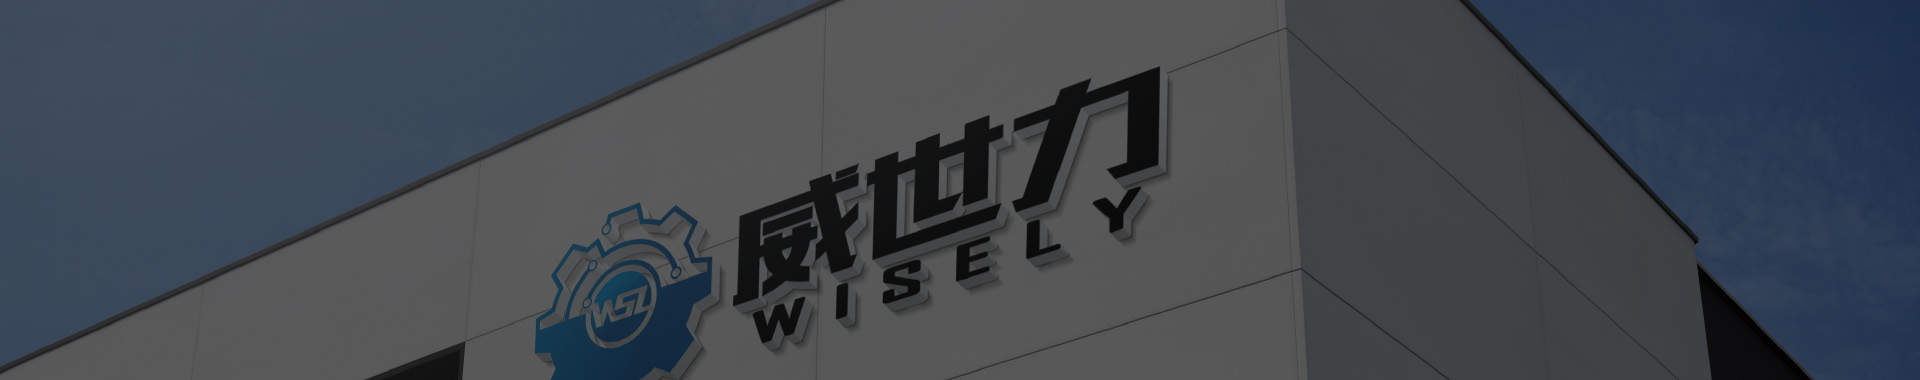 Taizhou Wisely Technology Co., Ltd.